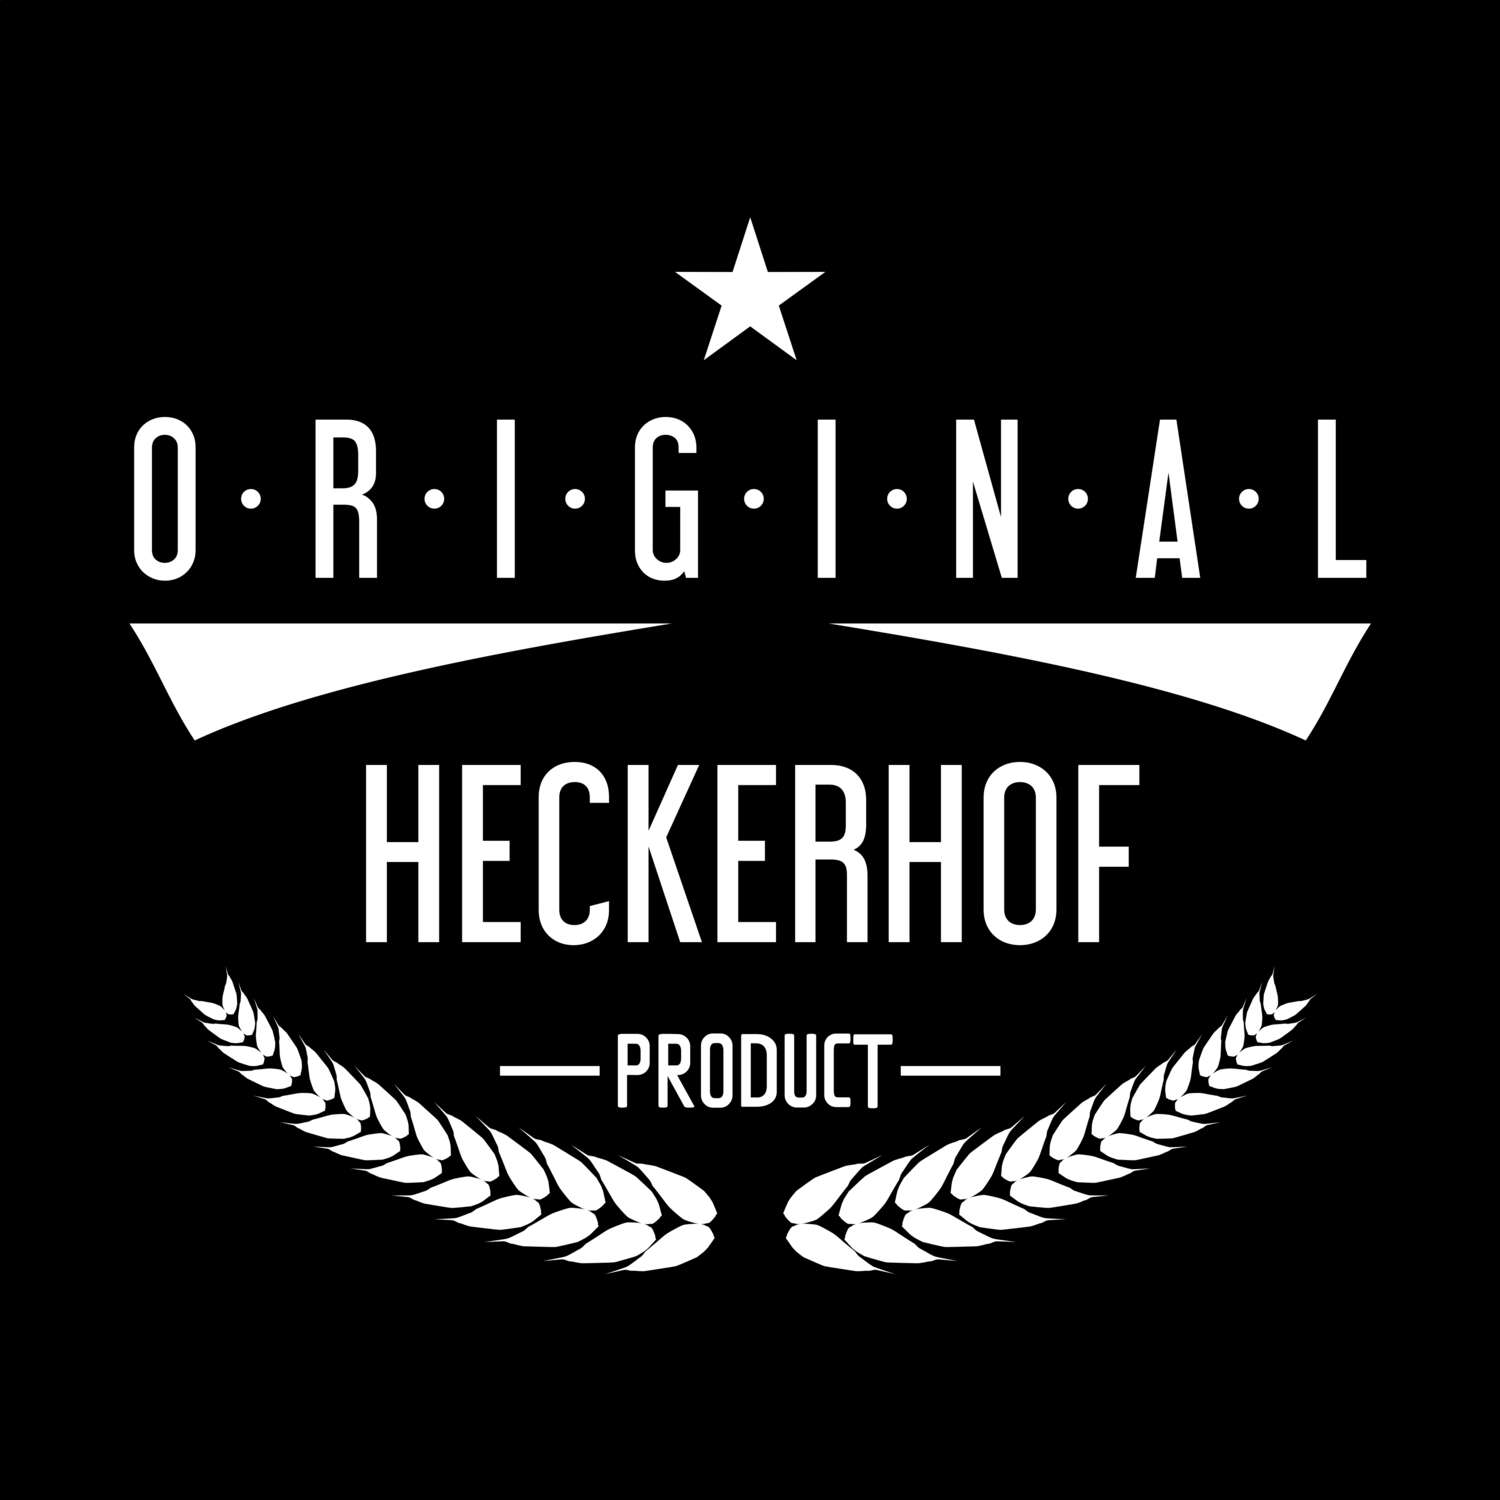 Heckerhof T-Shirt »Original Product«